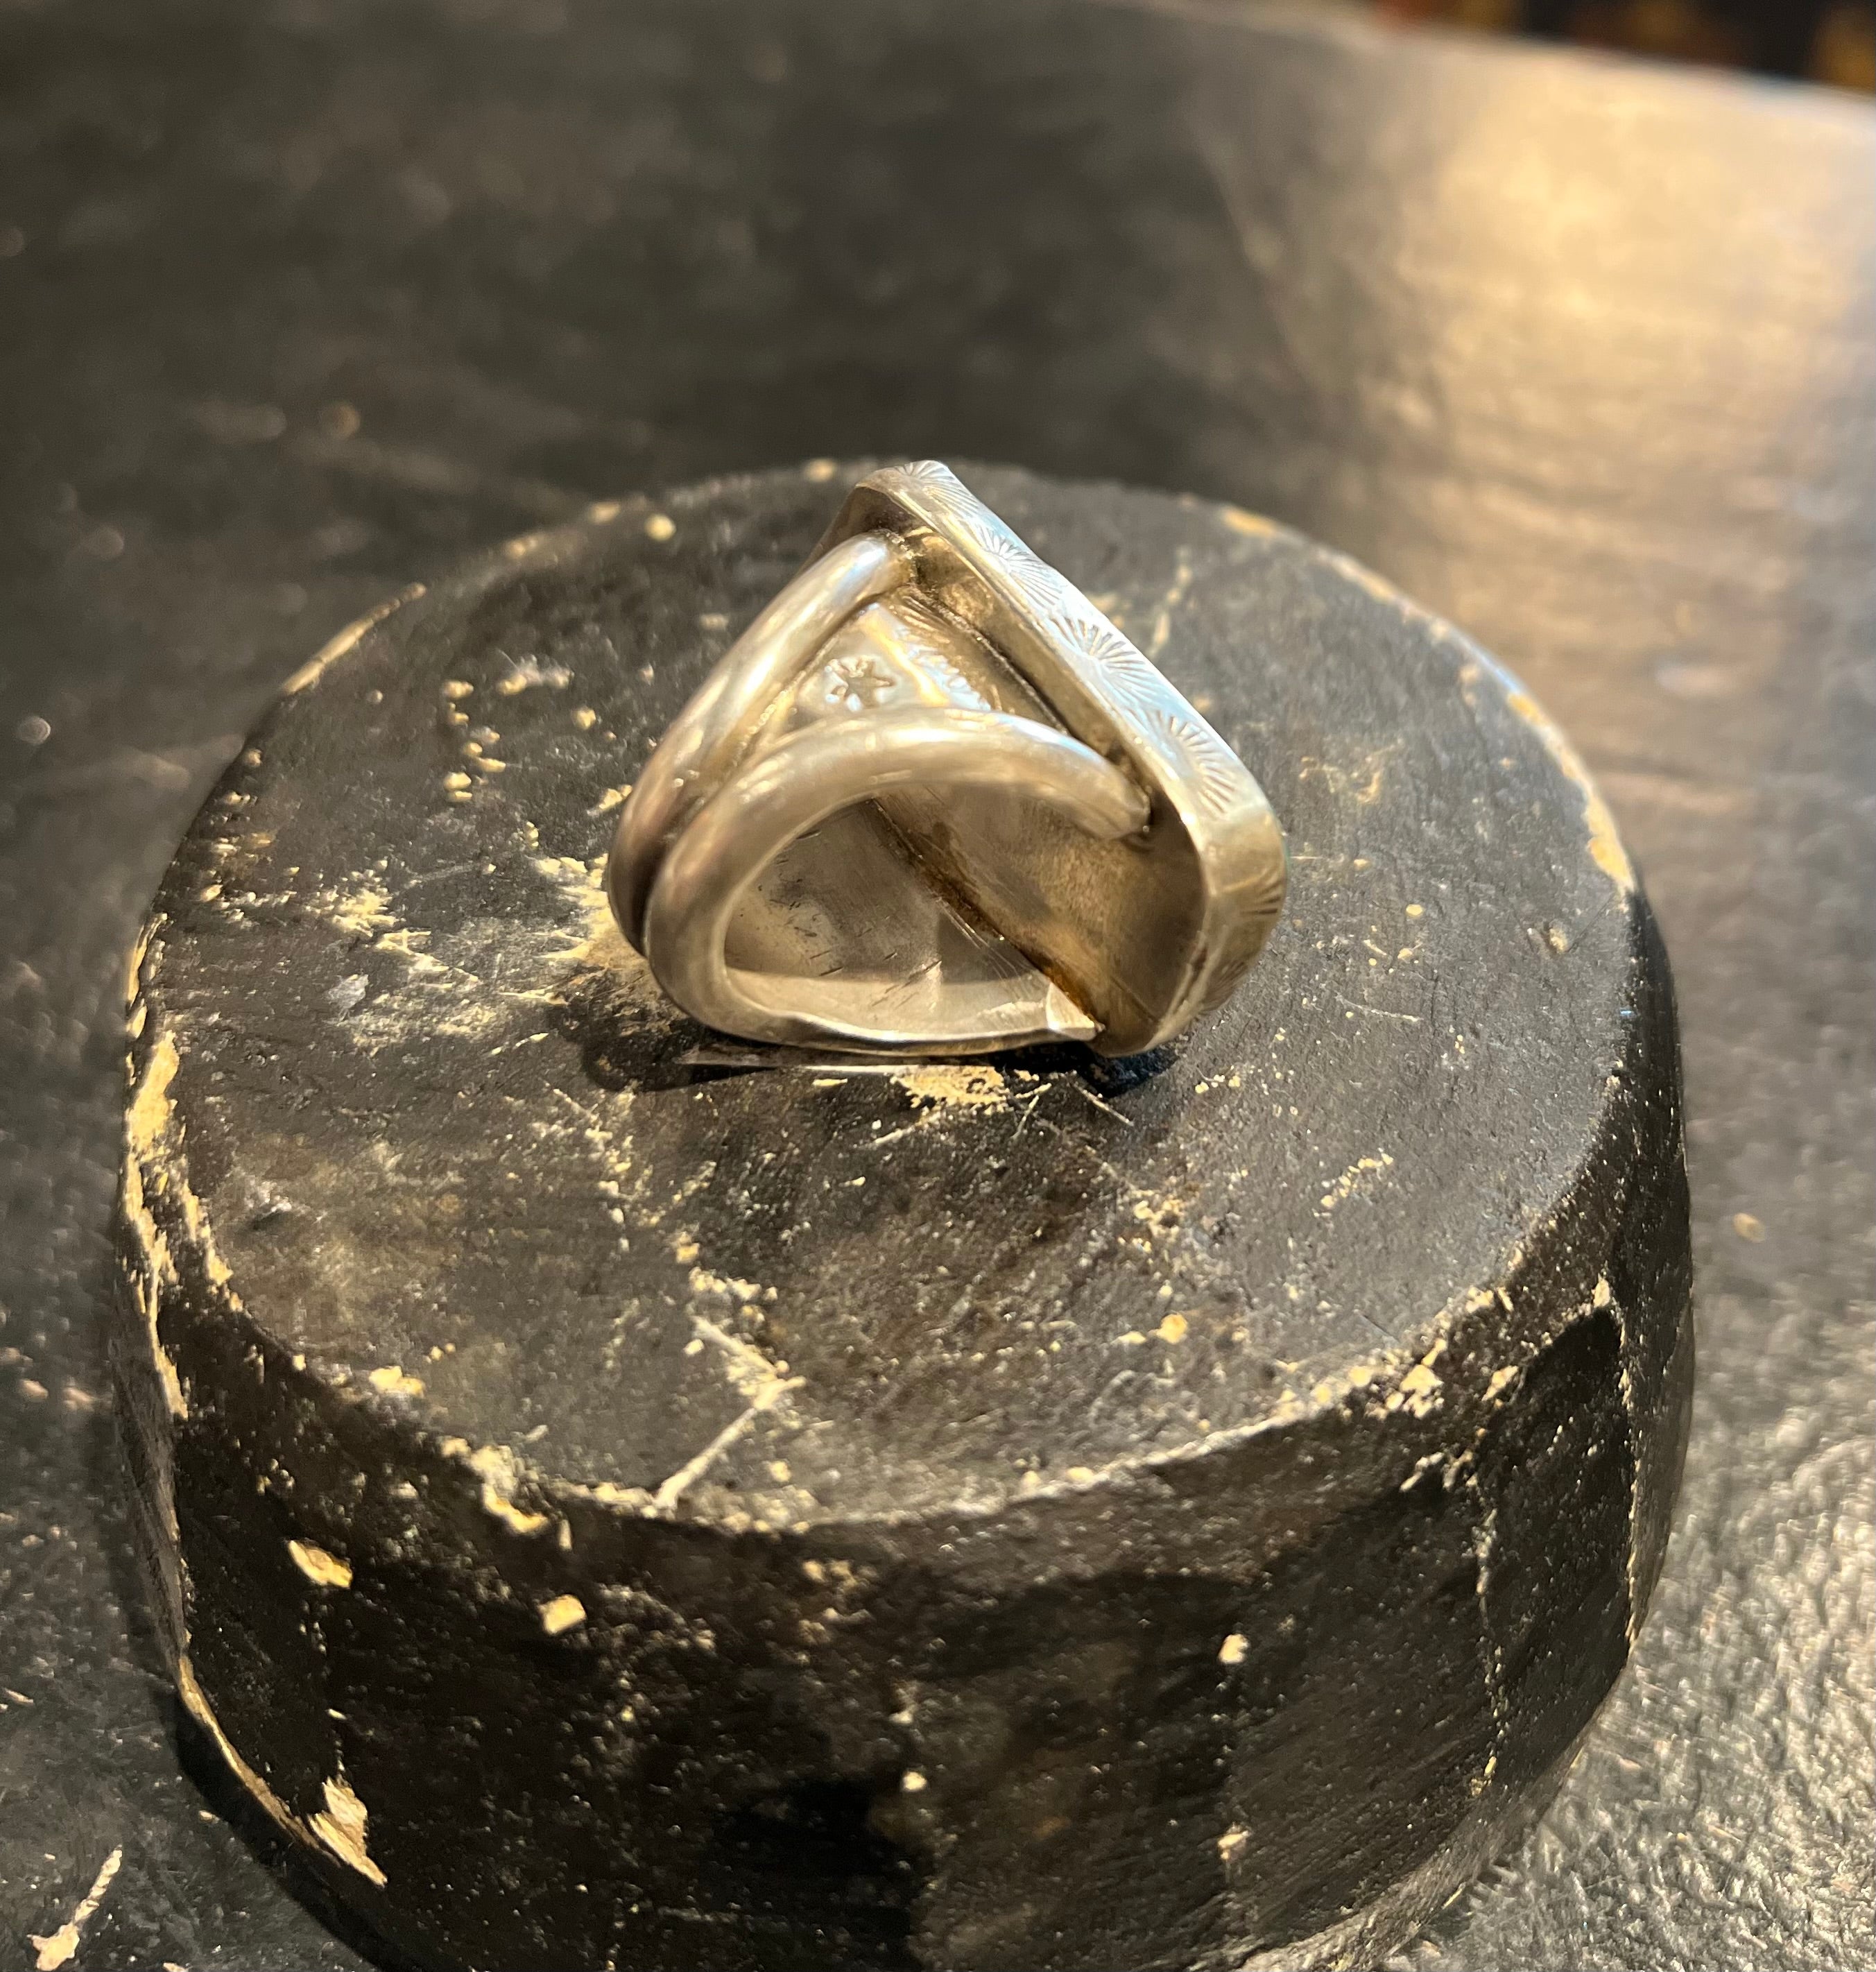 One of Kind Handmade Sterling / Chrysacolla / Quartz Ring